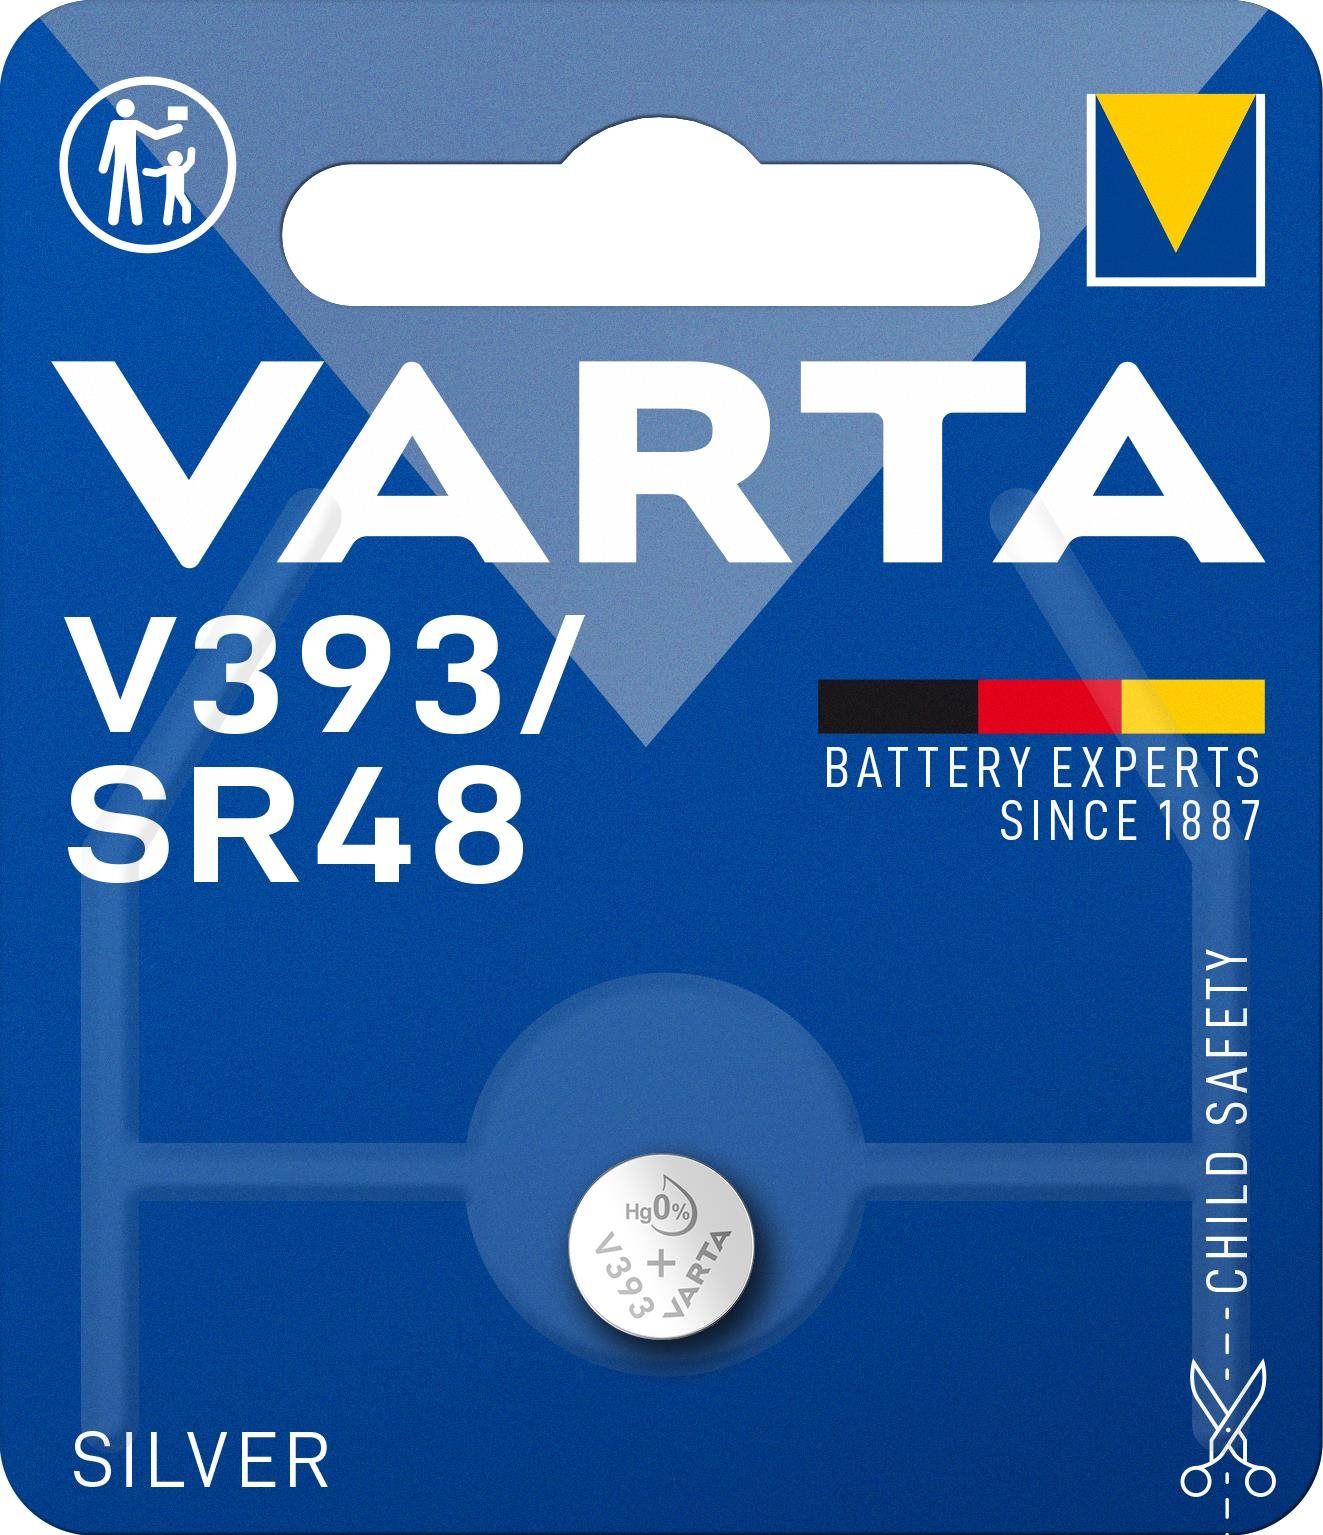 VARTA Speciális ezüst-oxid elem V393/SR48 1 db